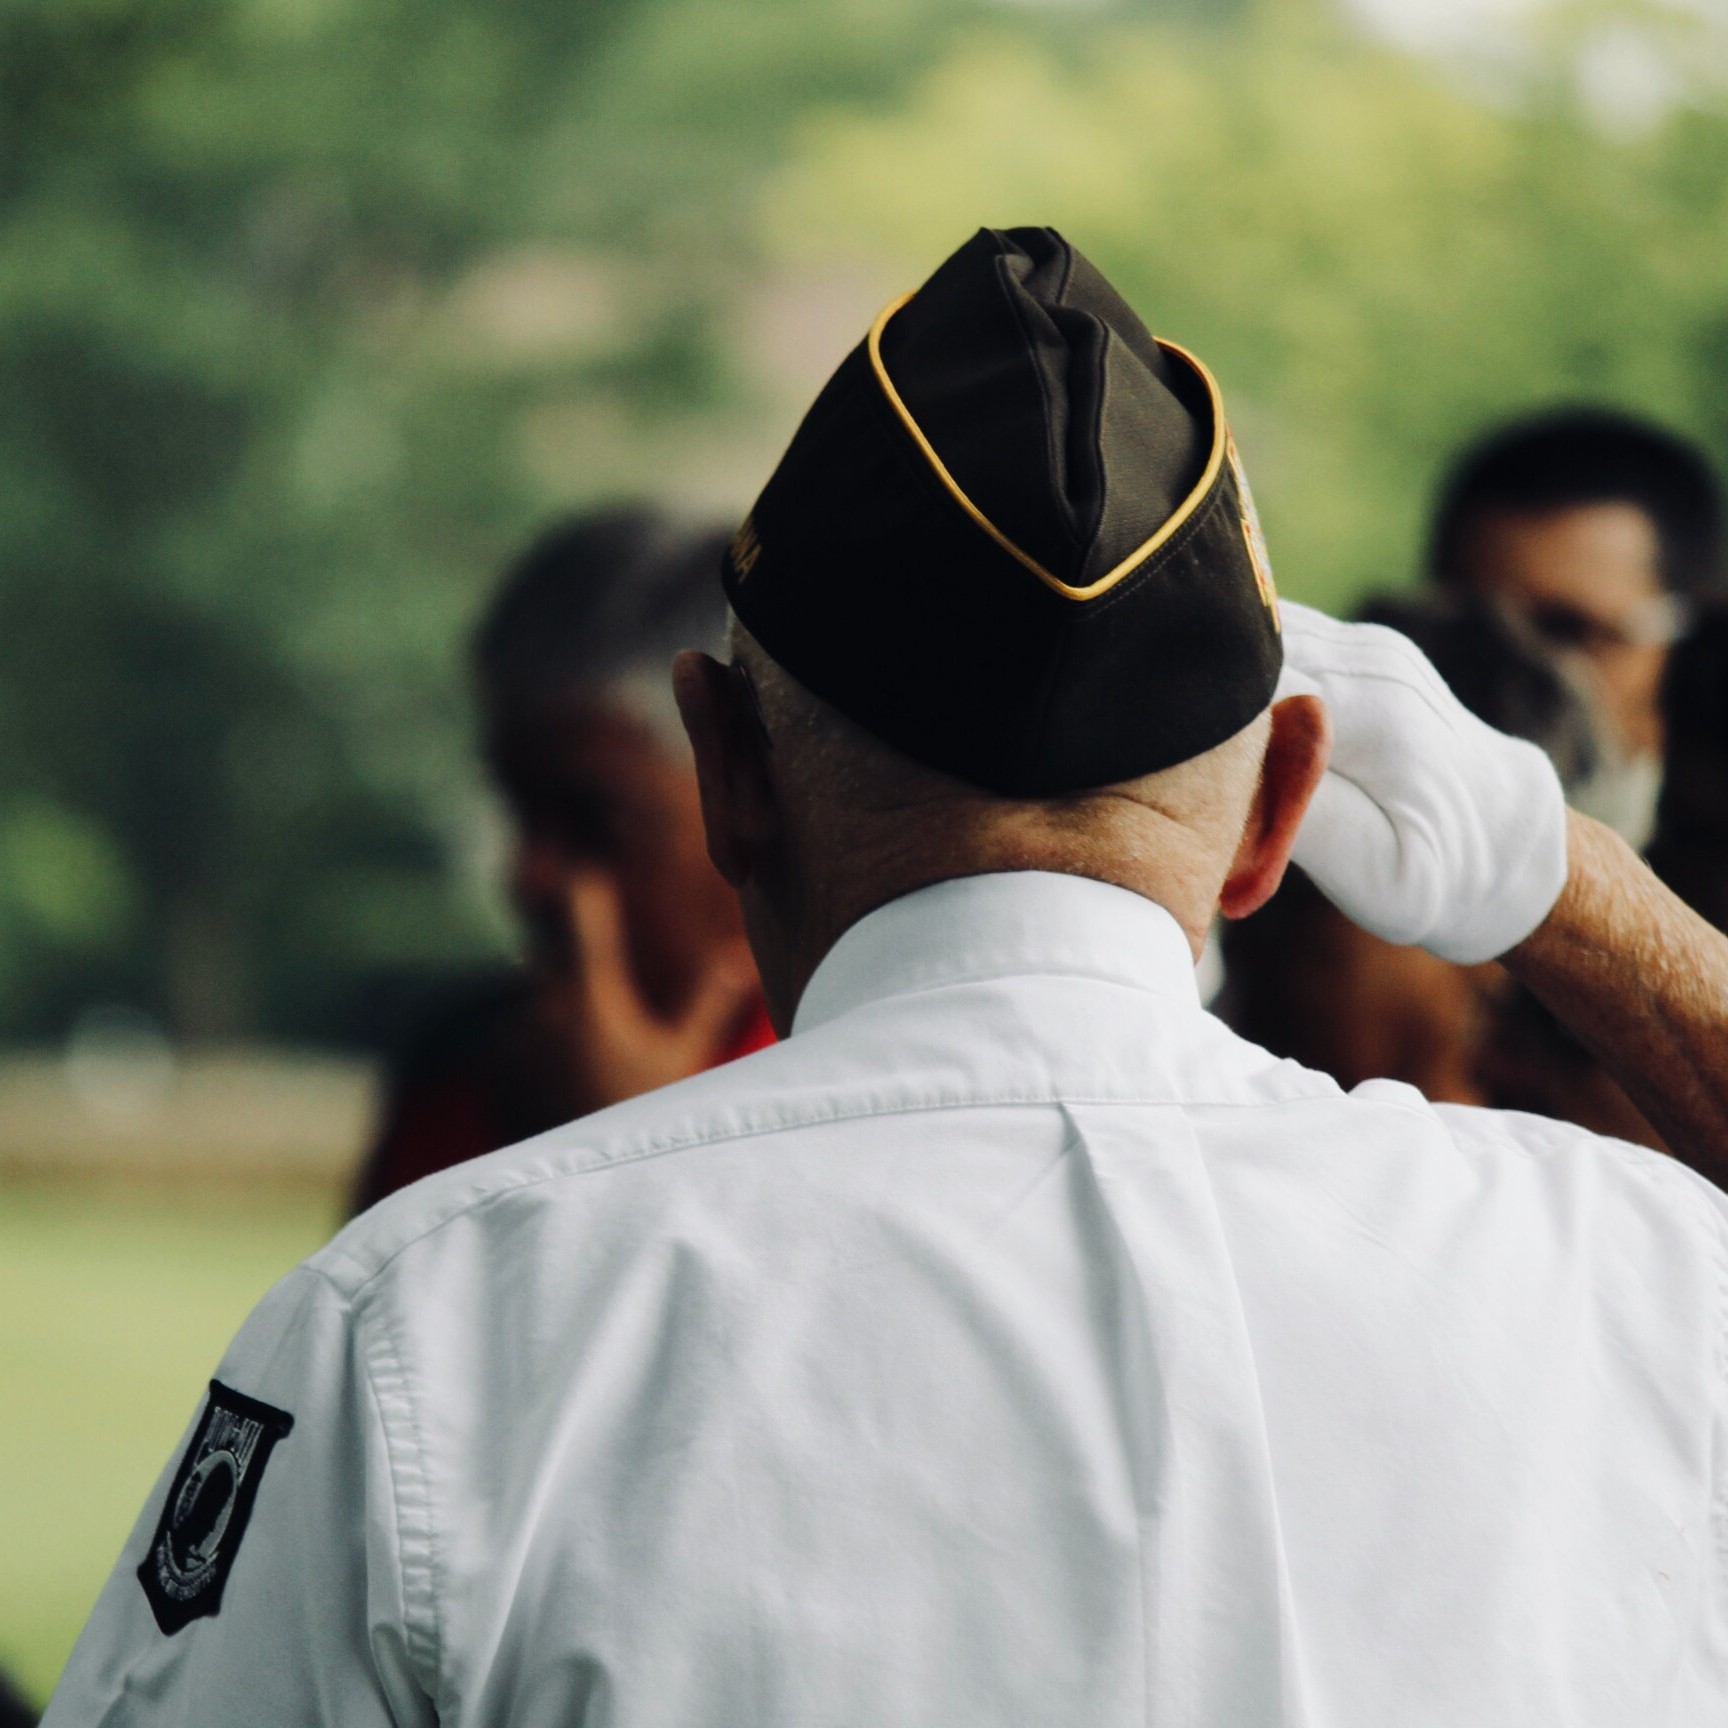 A saluting veteran represents our military & veteran services.